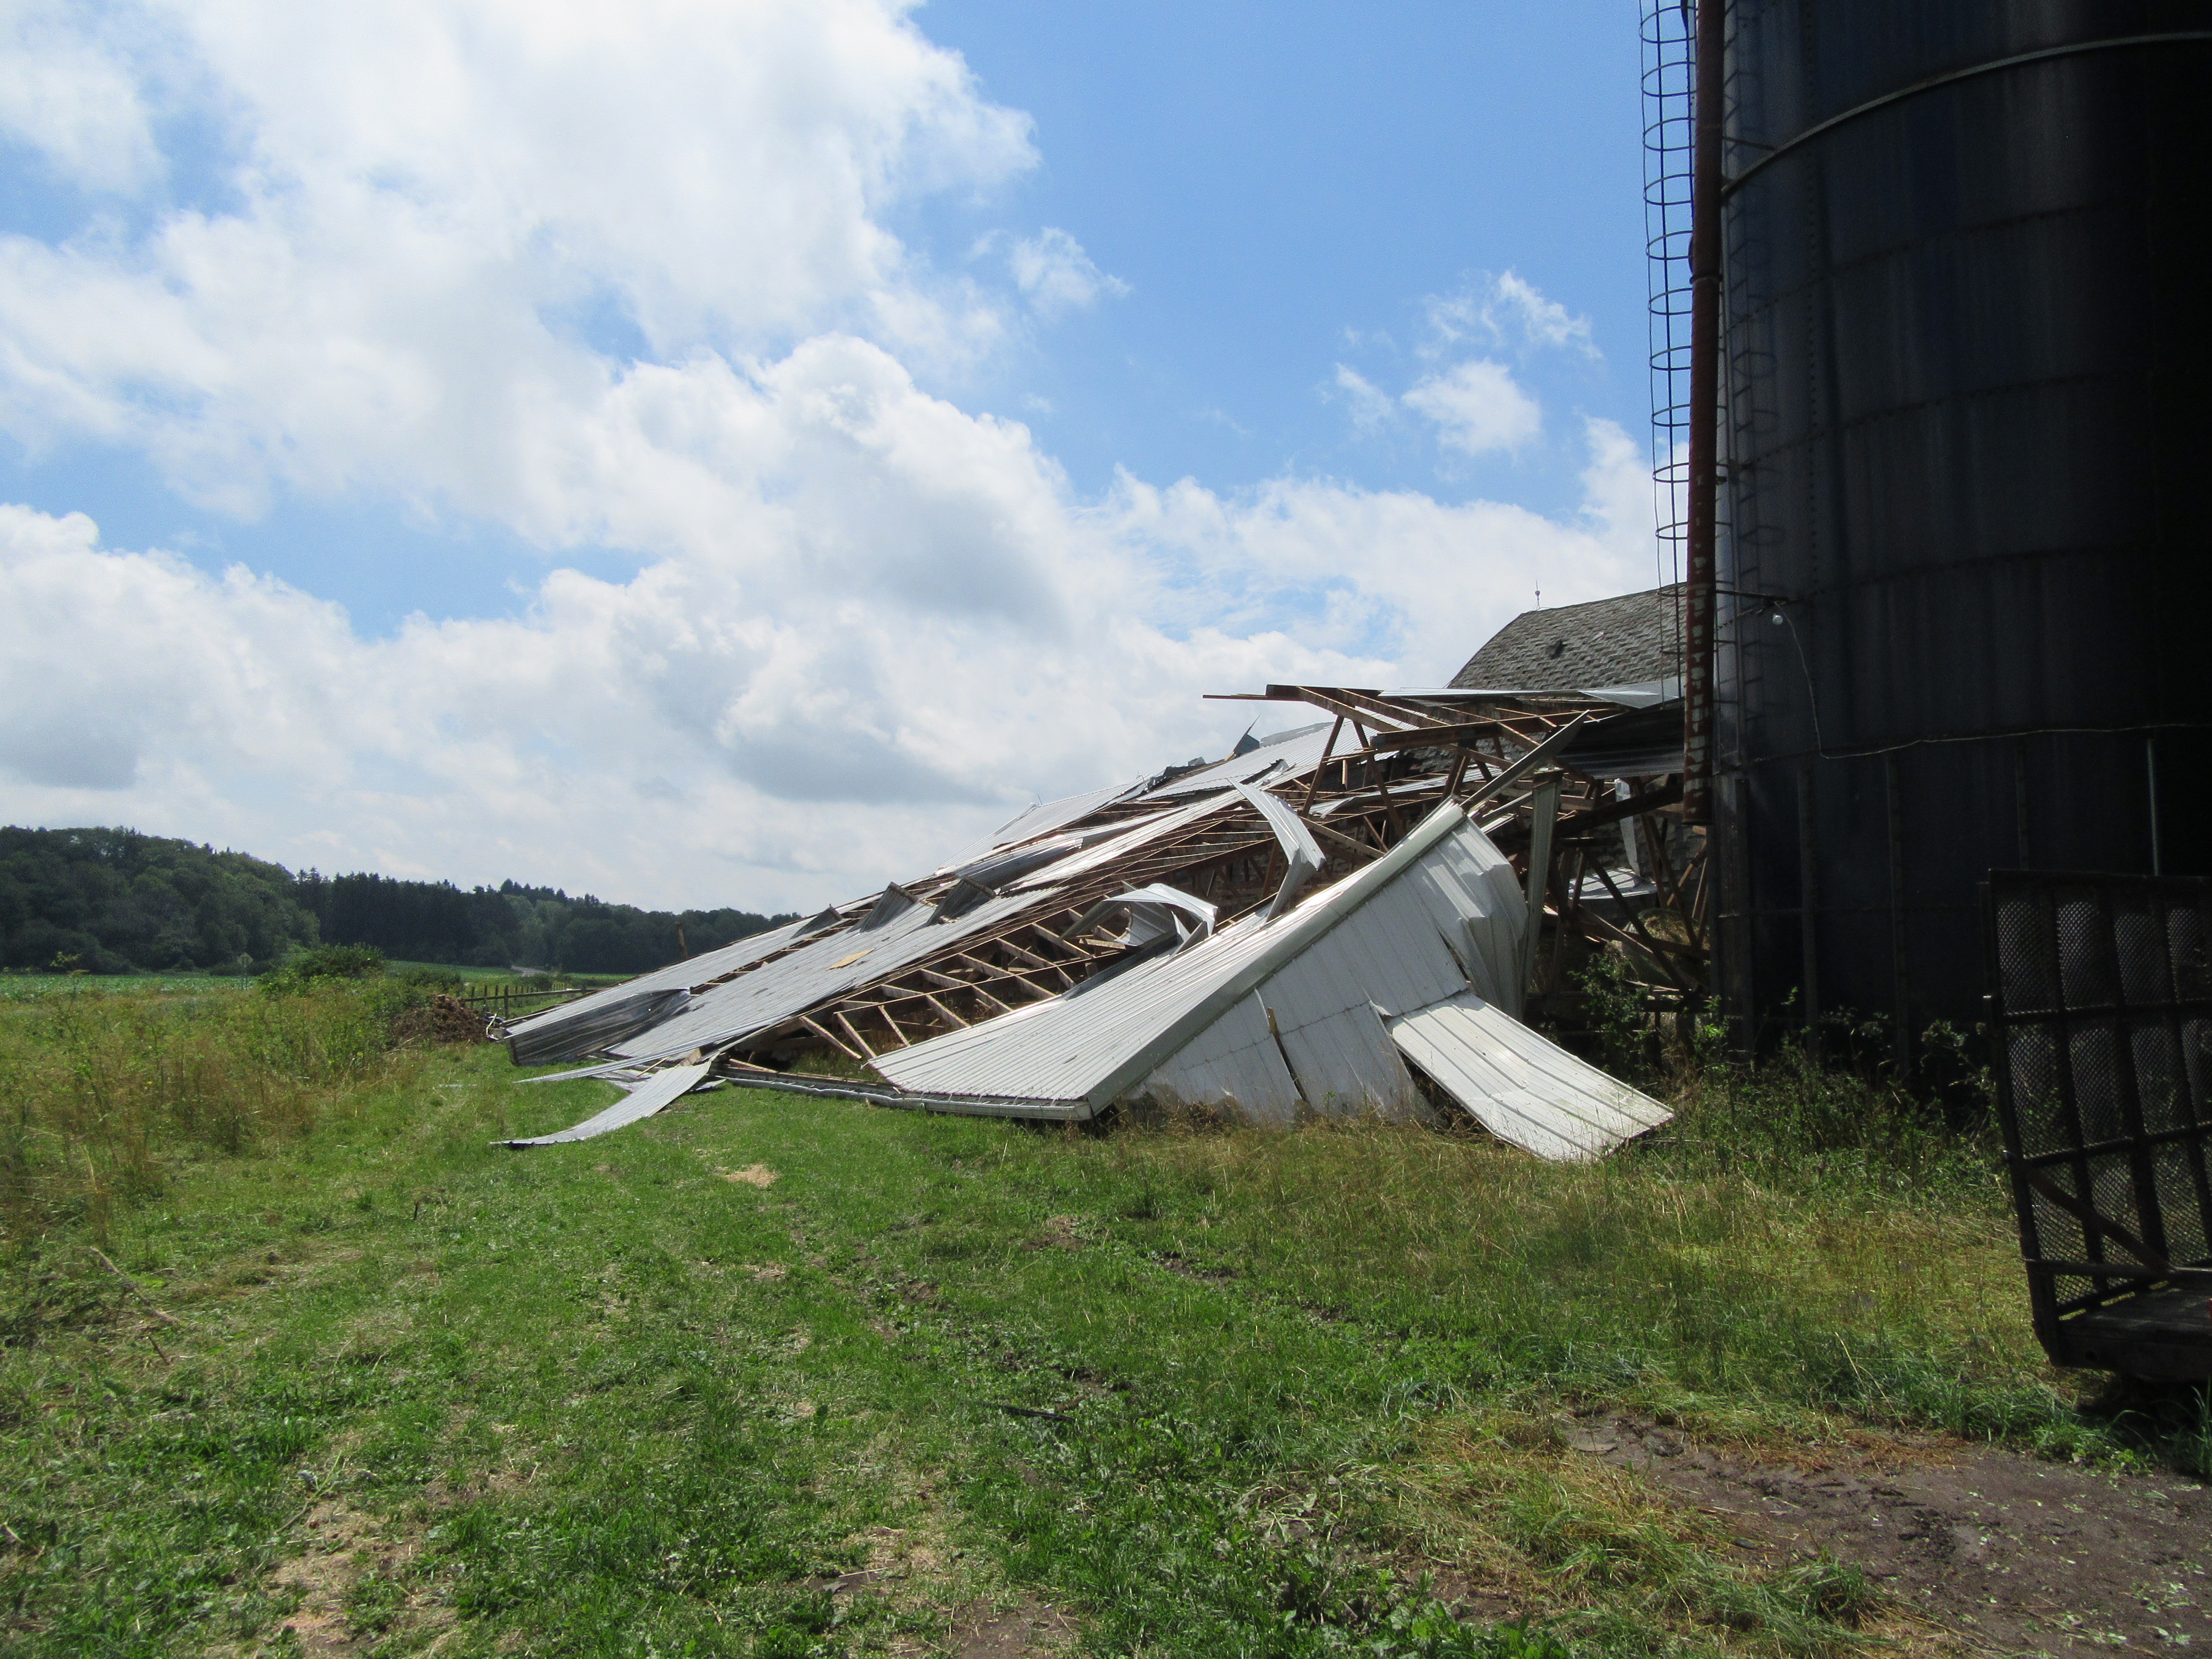 Extensive barn damage near the start of the tornado path